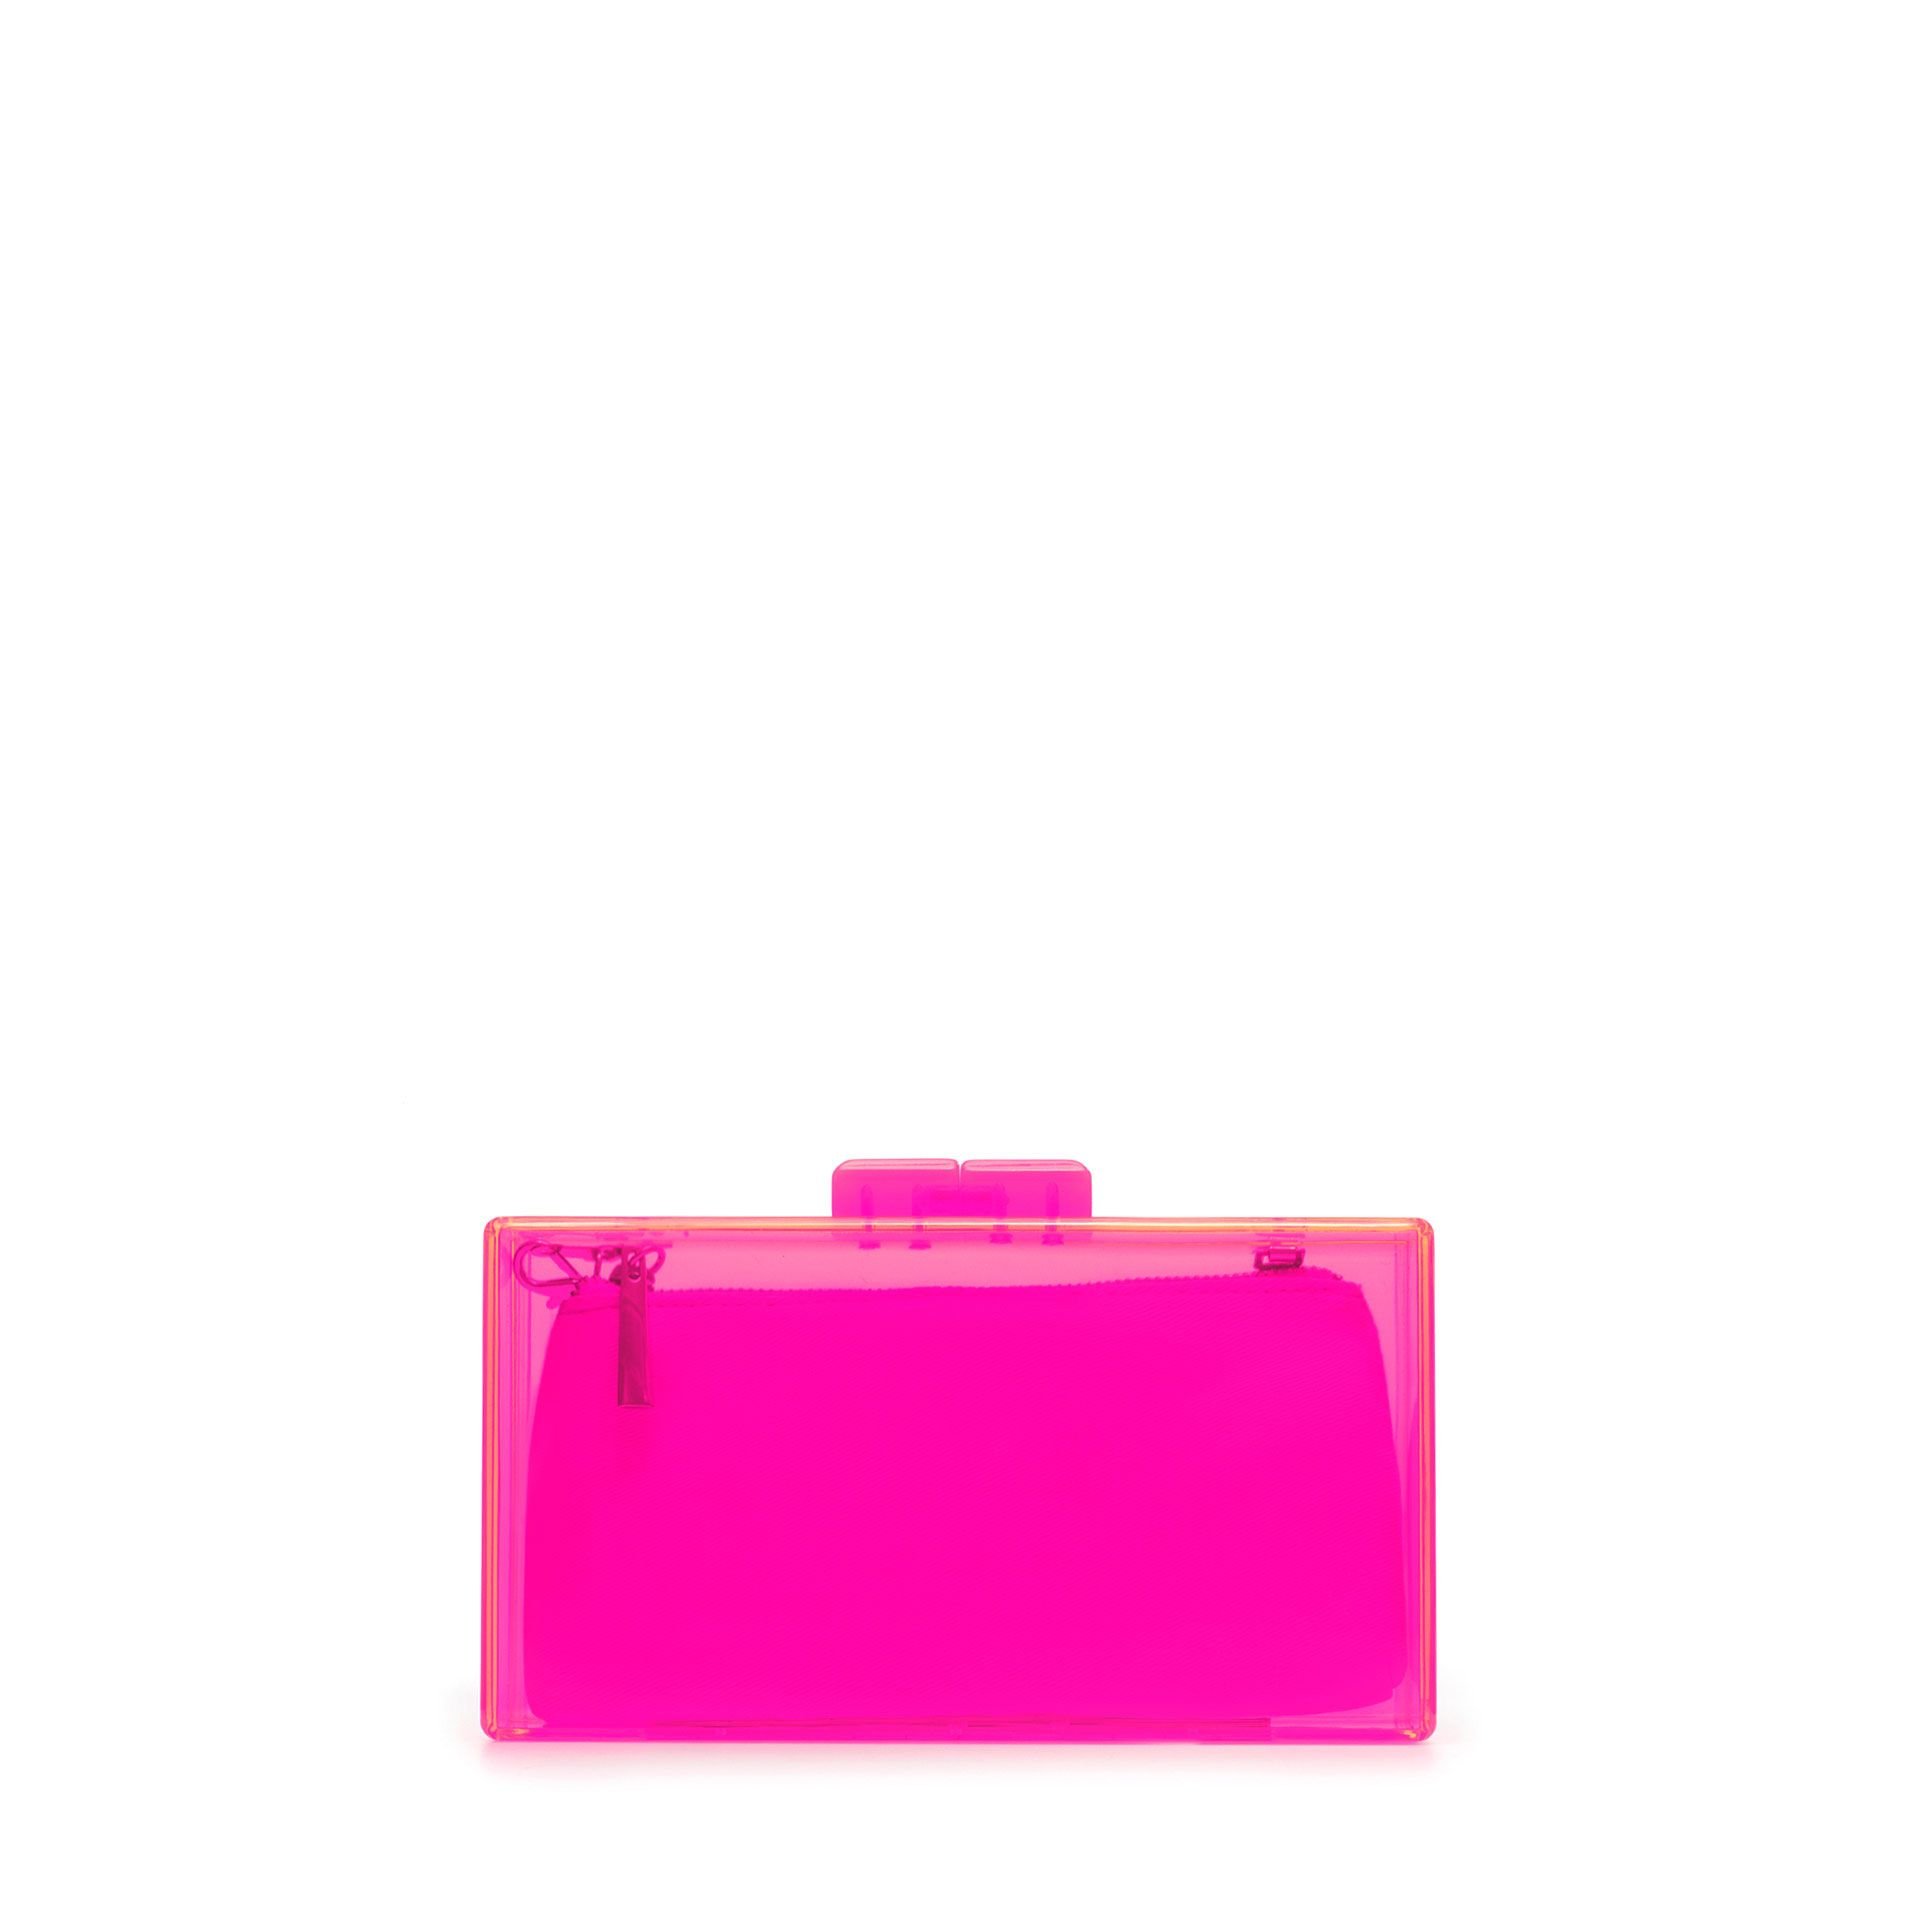 Zara Neon Box Clutch in Pink.jpg